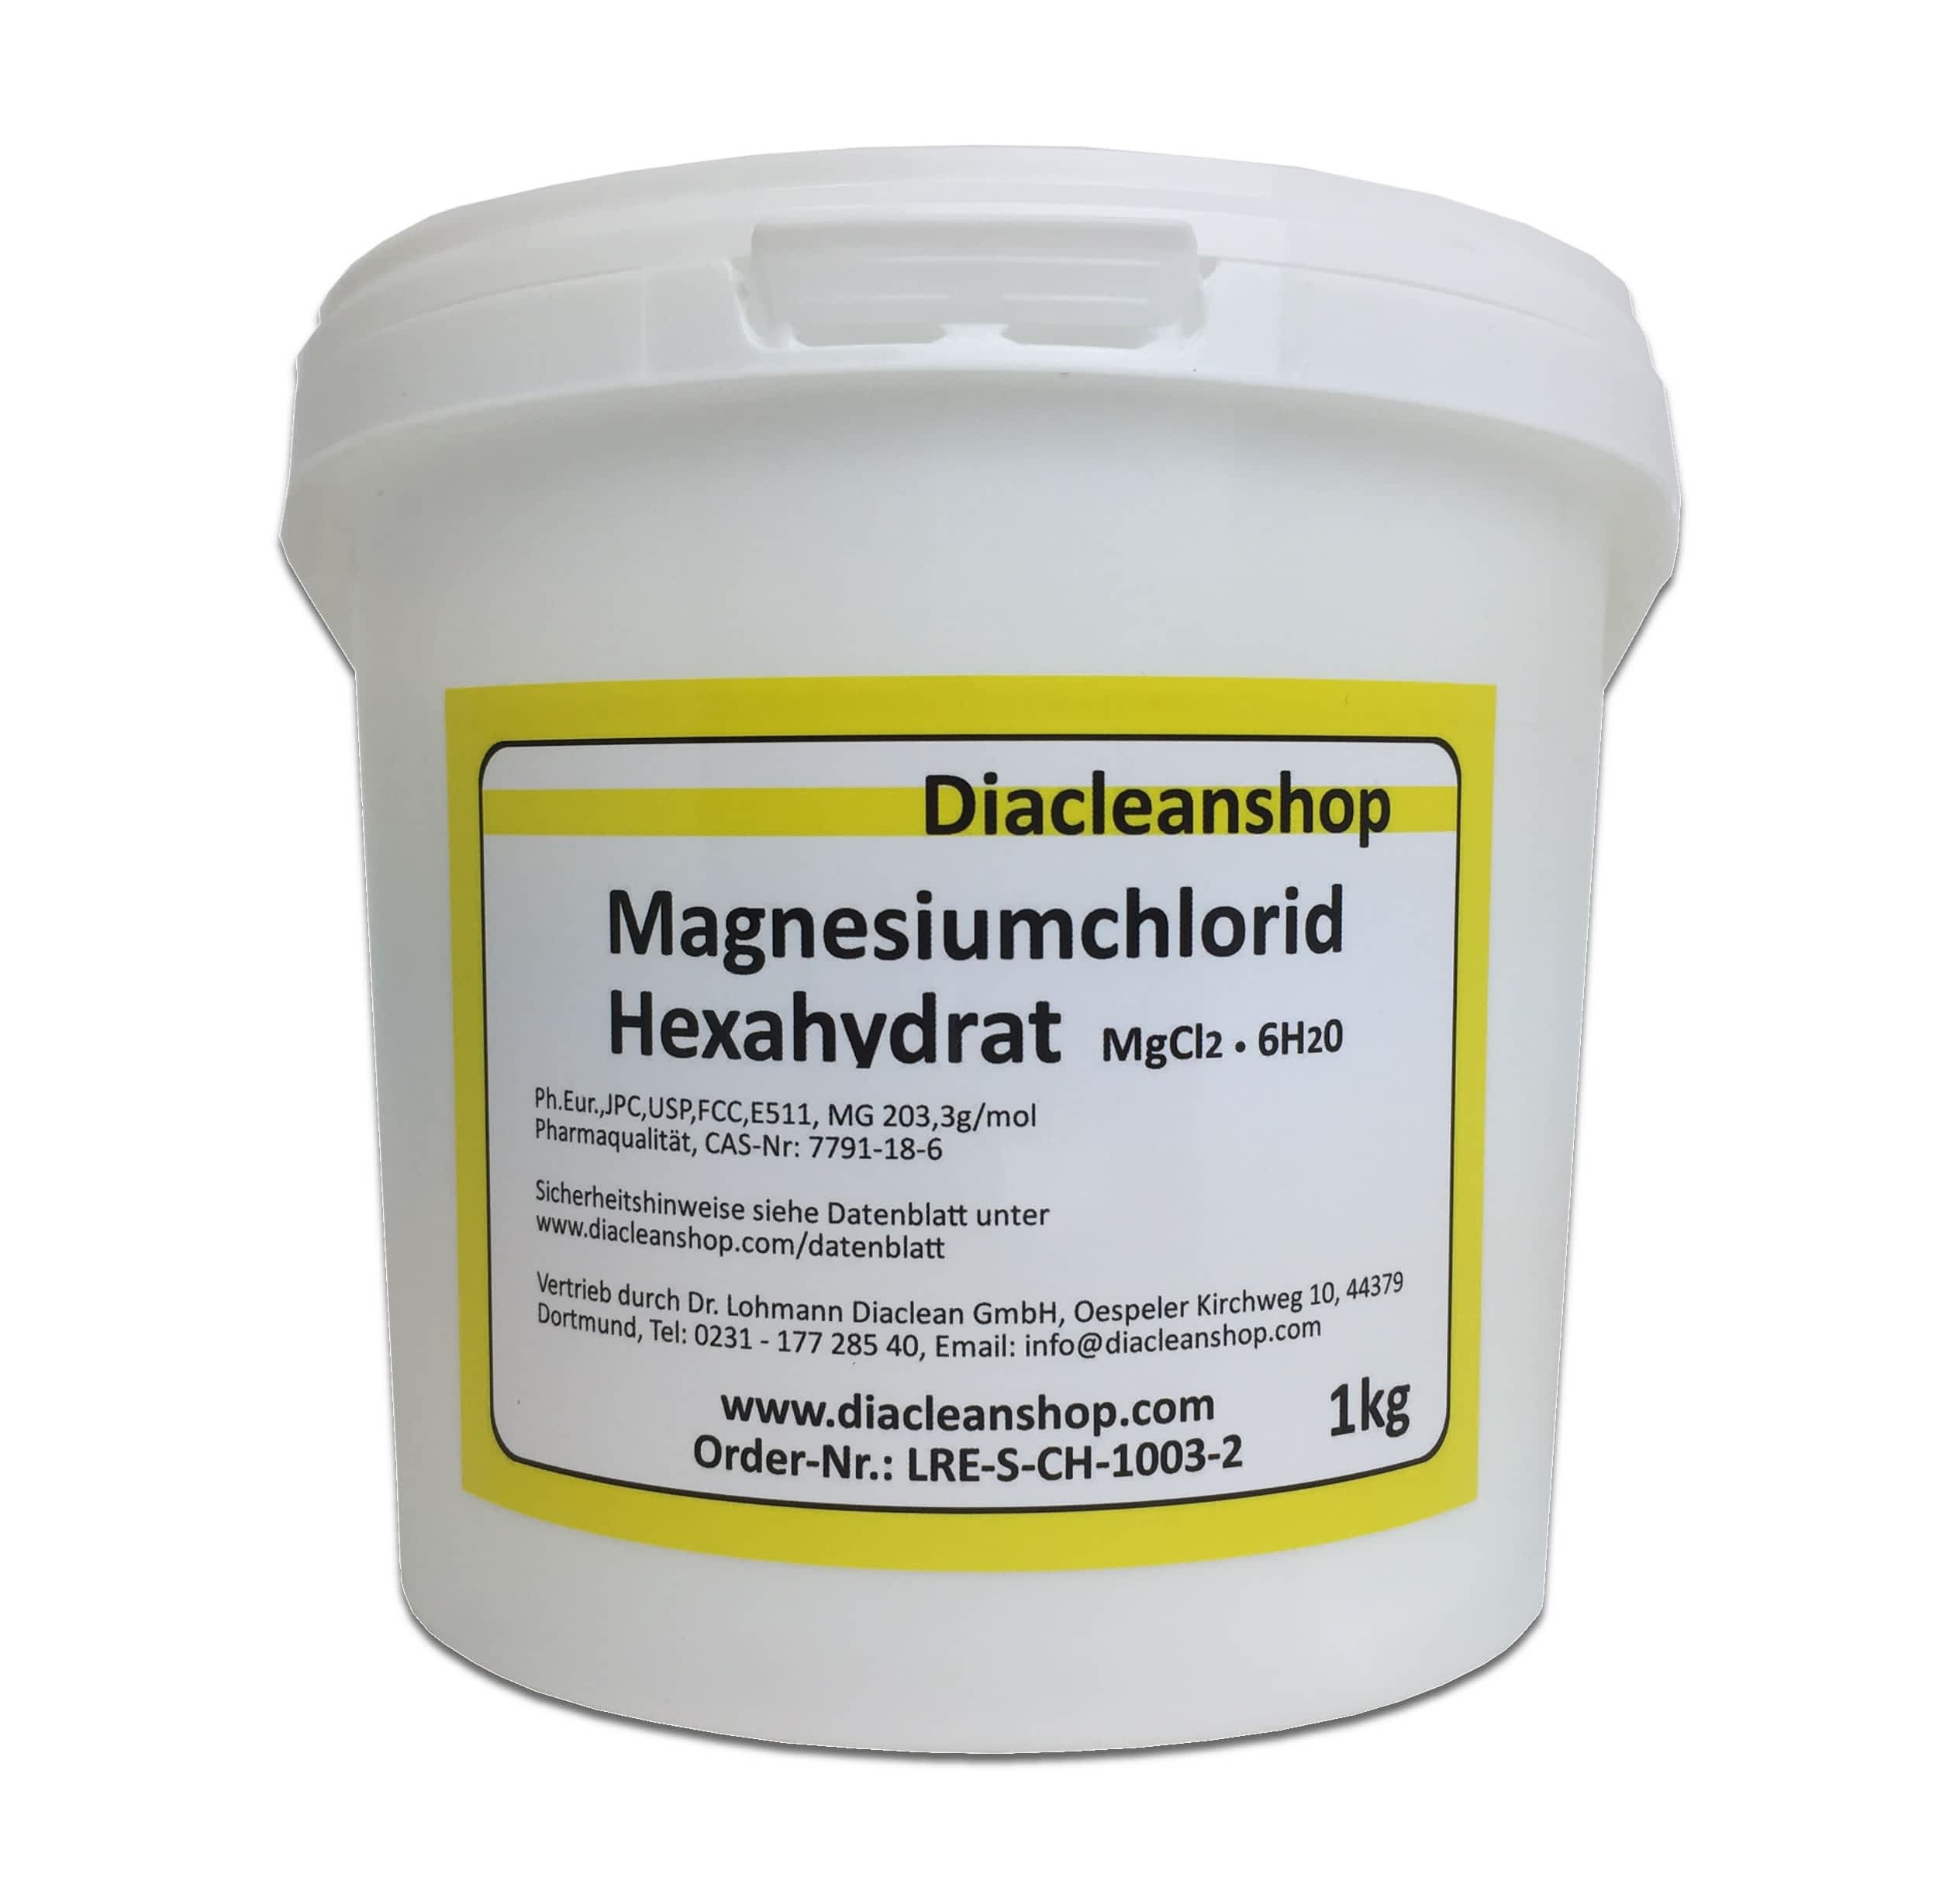 Magnesiumchlorid Hexahydrat - Pharma E511